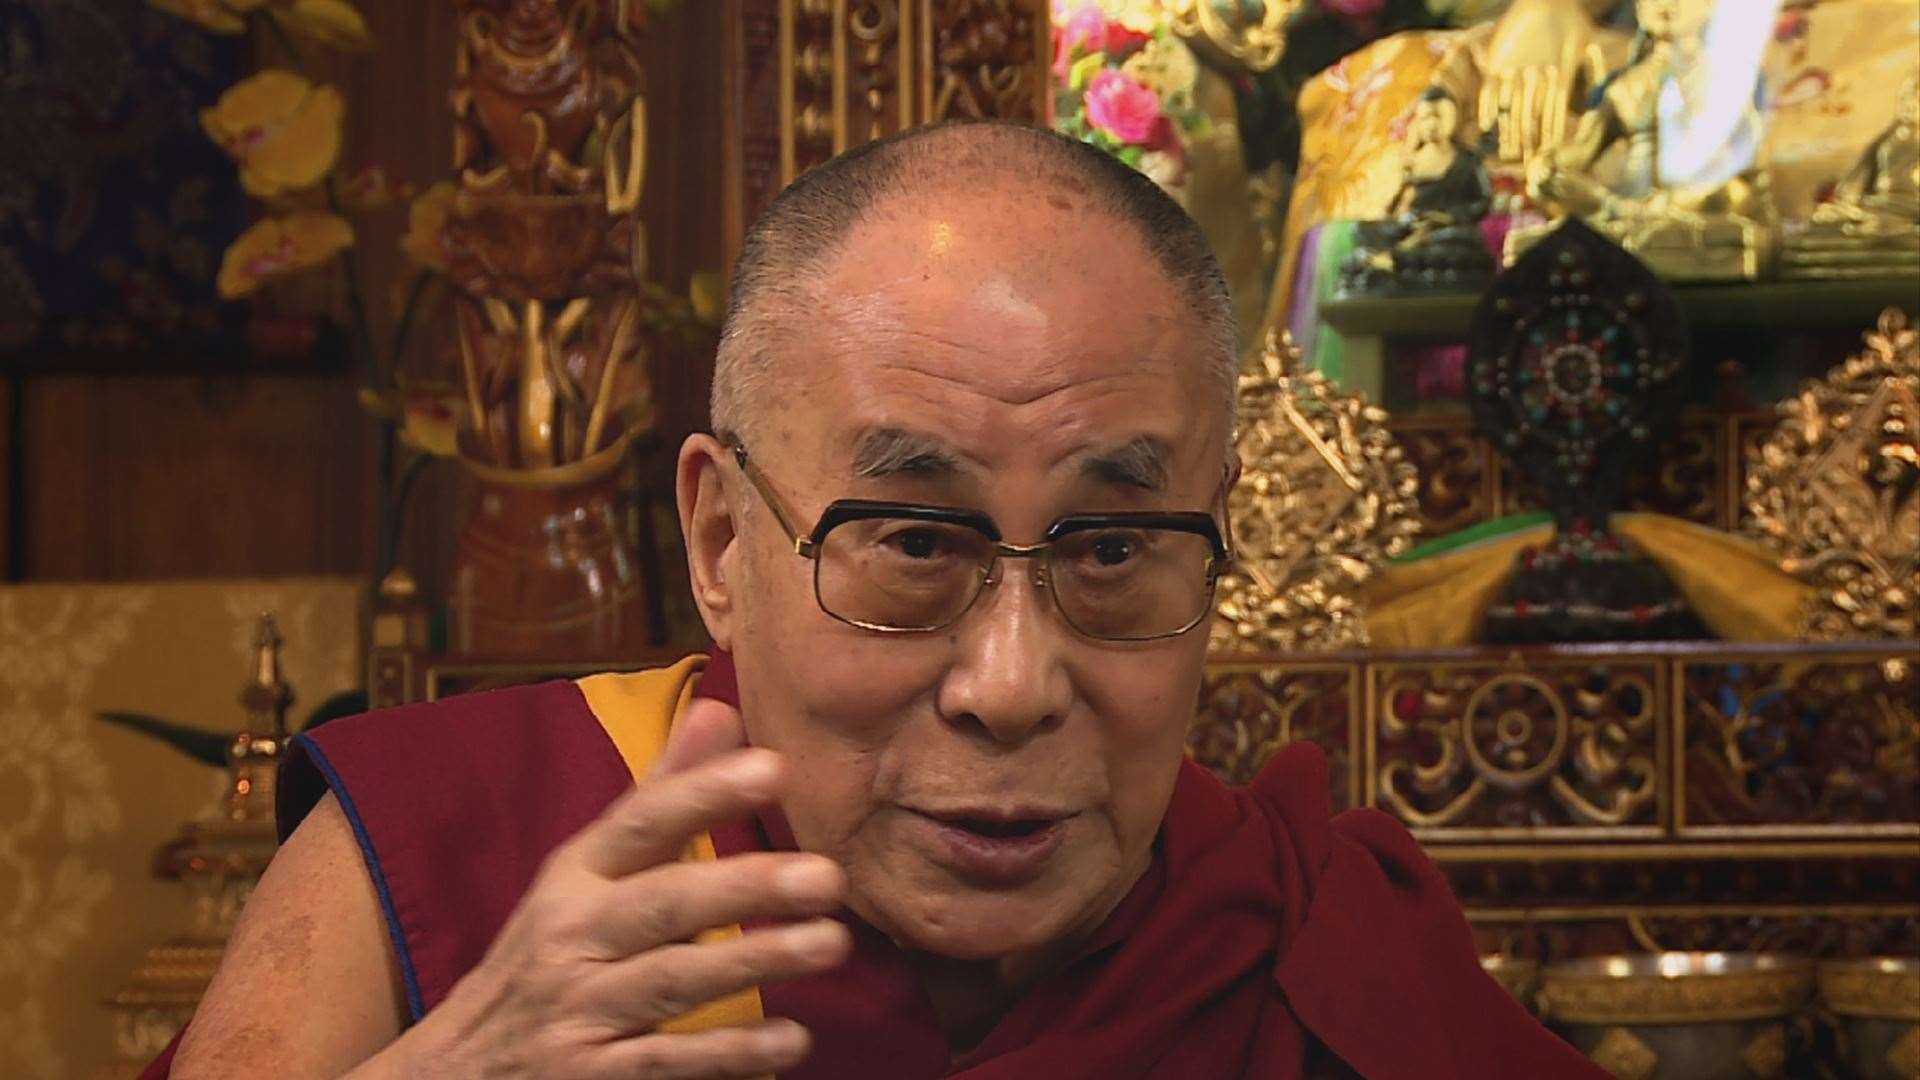 The Dalai Lama shares his story.